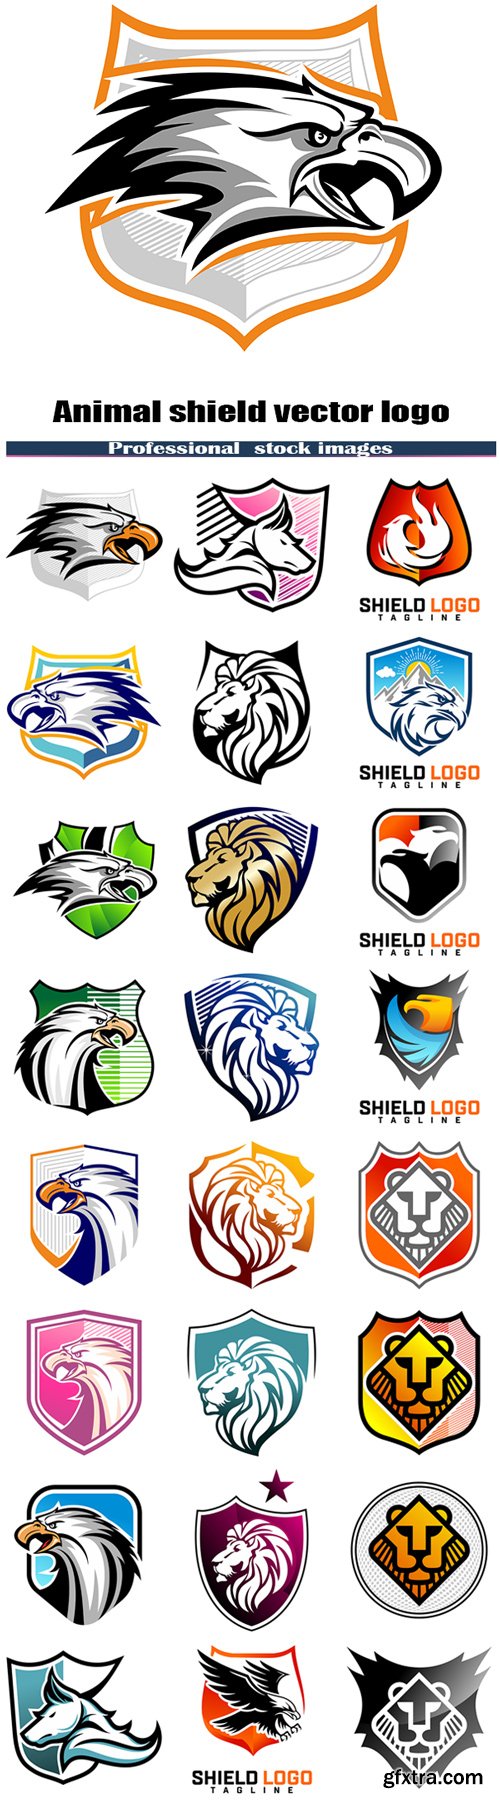 Animal shield vector logo